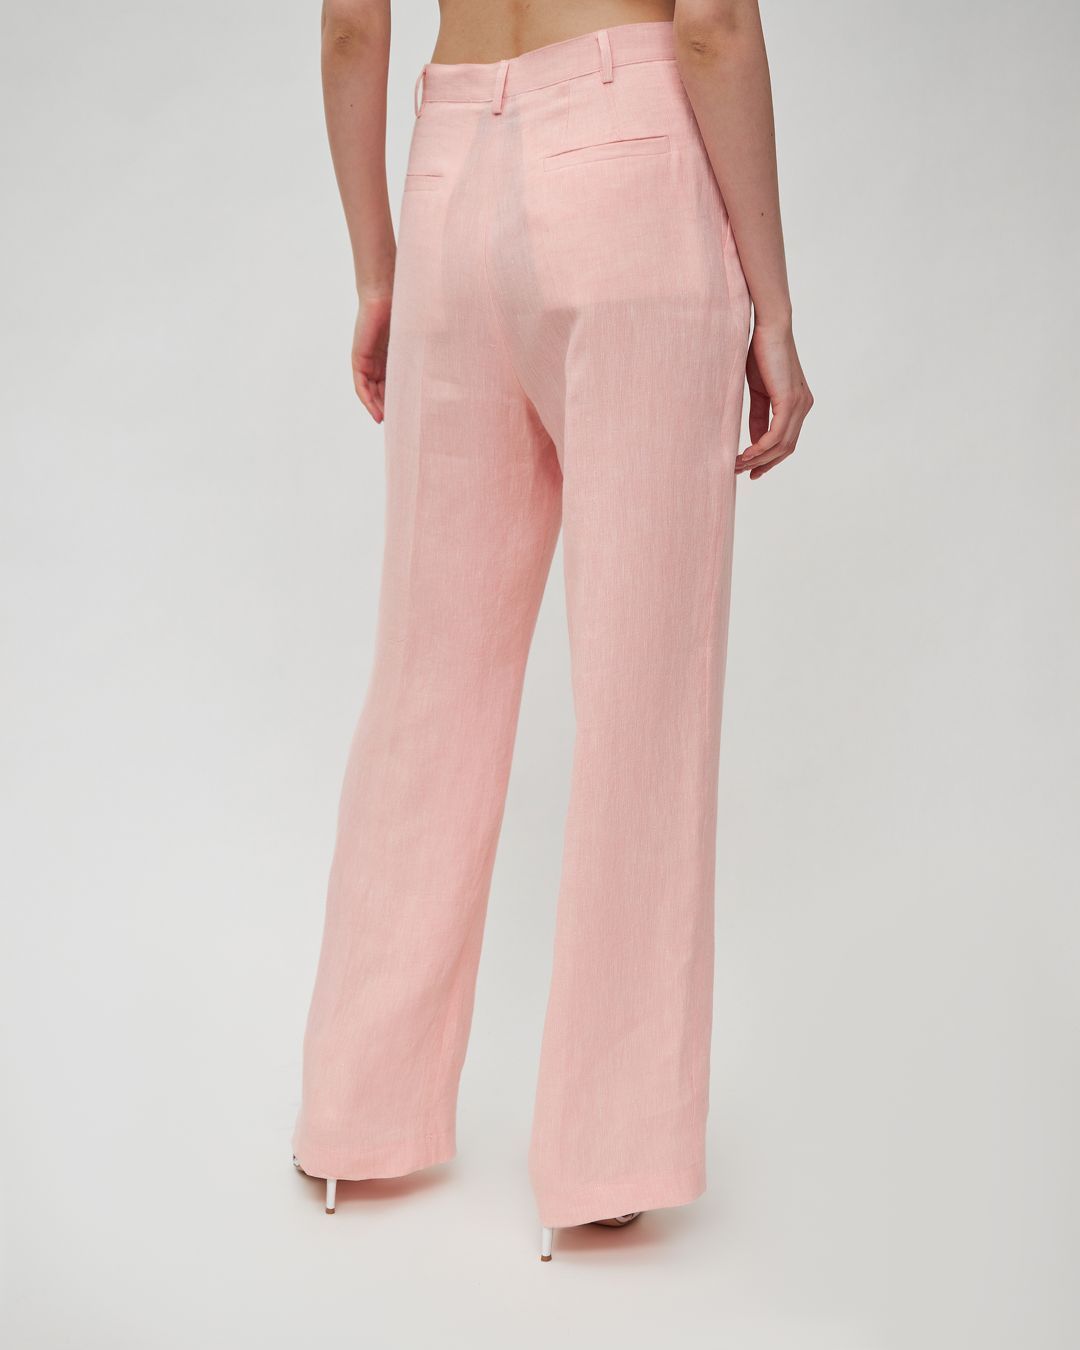 Pink Linen Pants